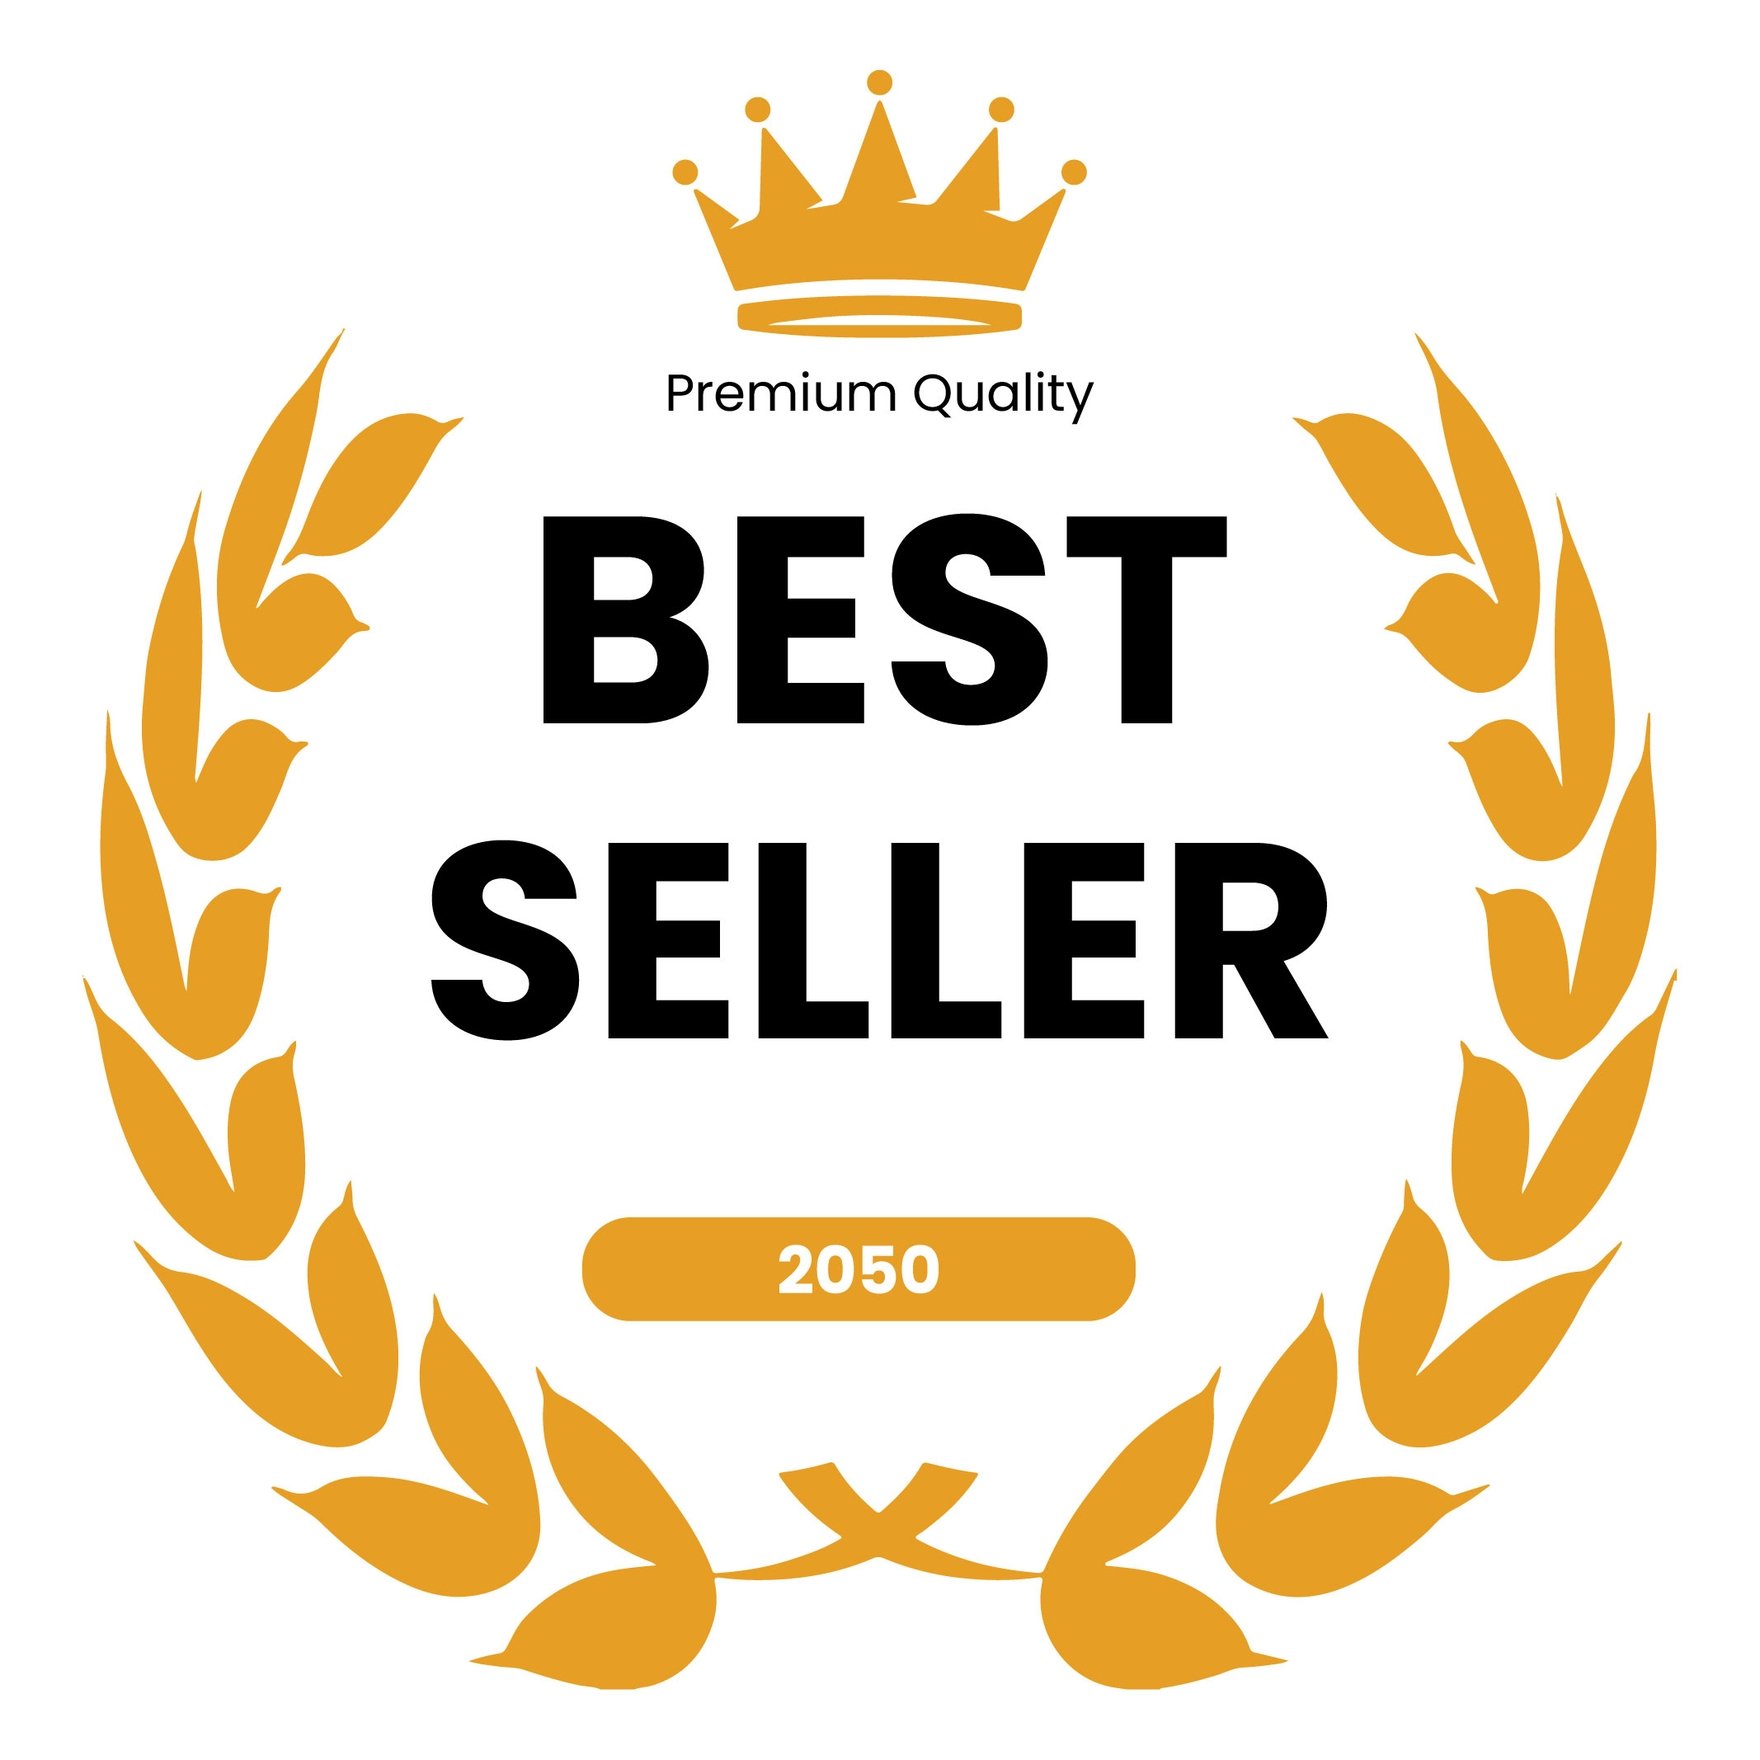 Best seller badge logo design Royalty Free Vector Image